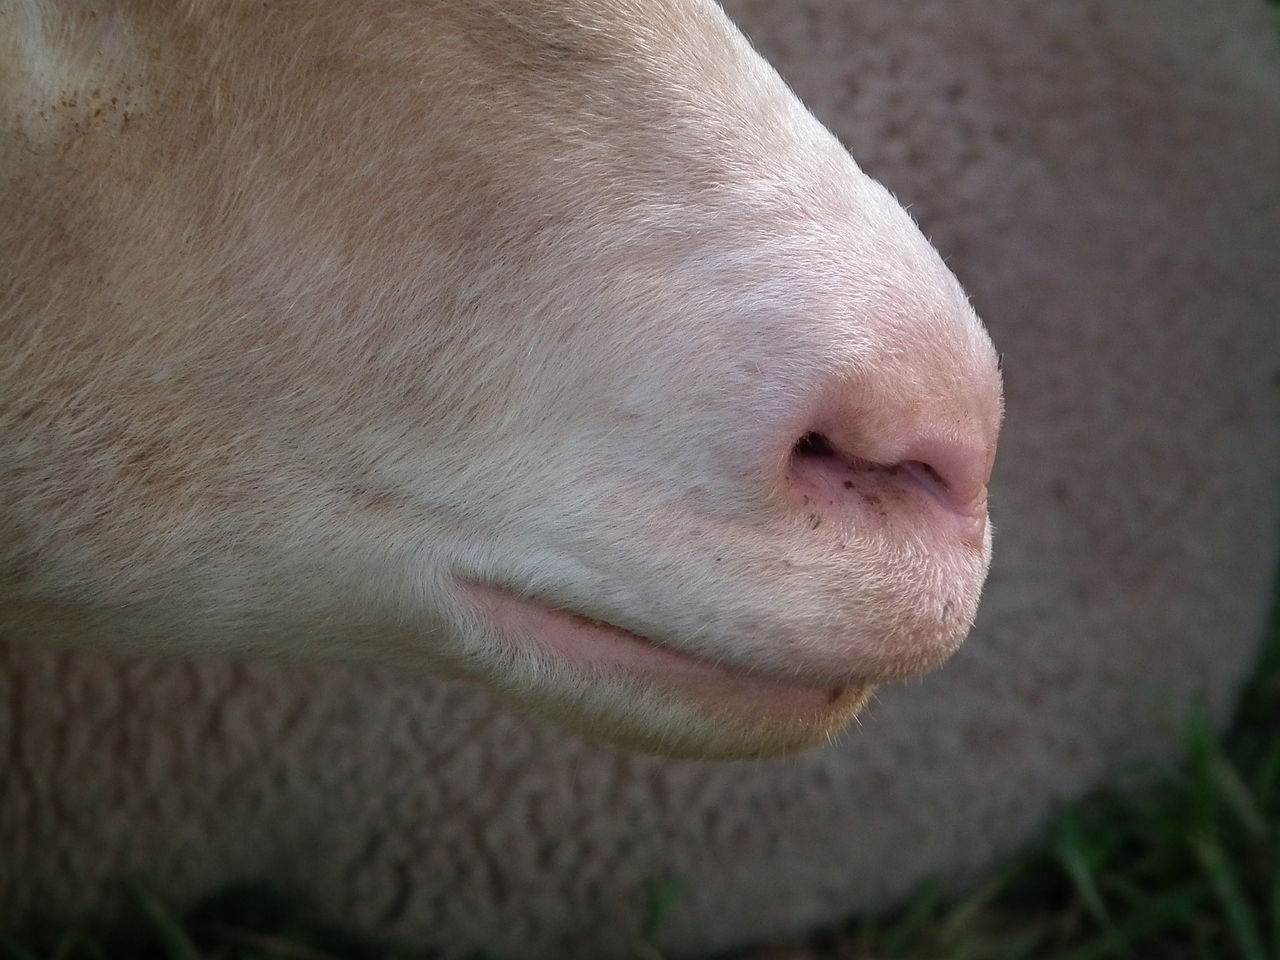 Beautiful Merinoschaf nose photo found on Wiki Commons, attributable to 4028mdk09